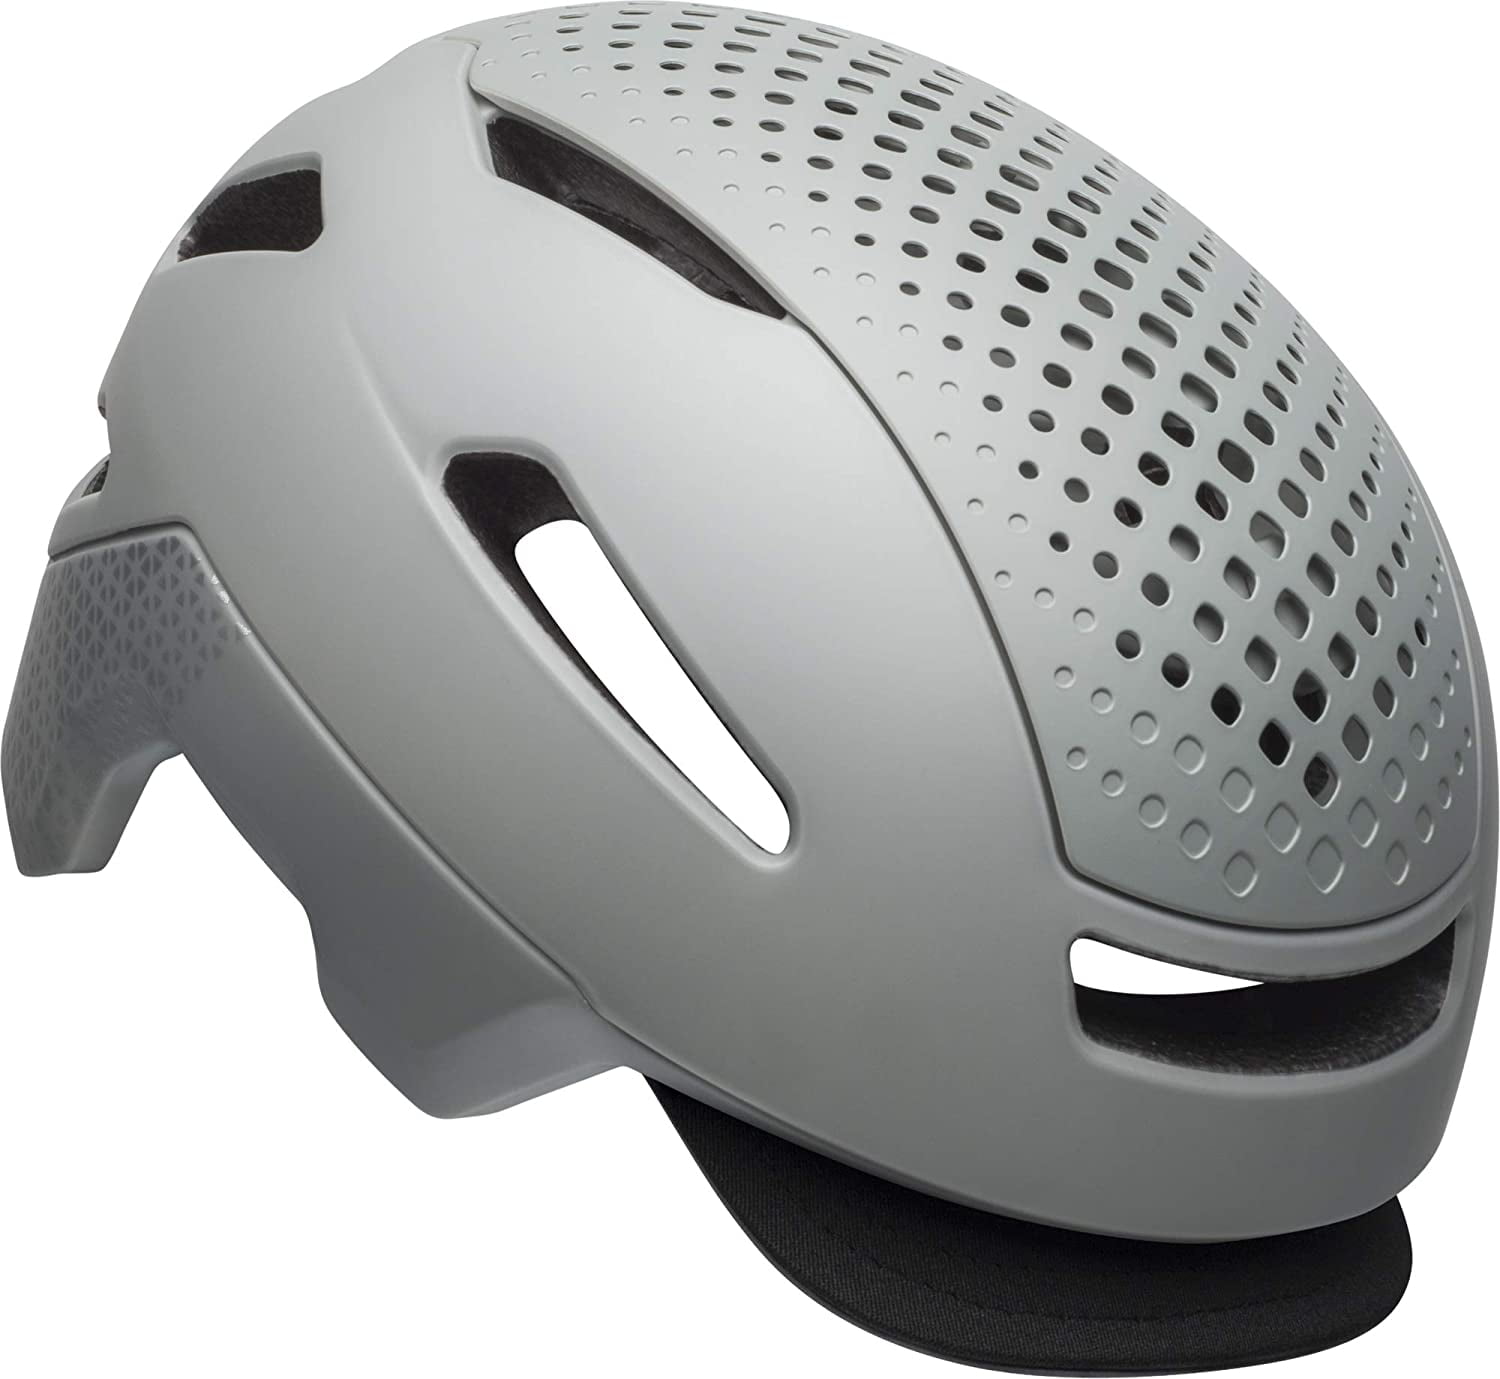 Paragliding Helmet brand new White in colour Small-Medium 51-58cm's 